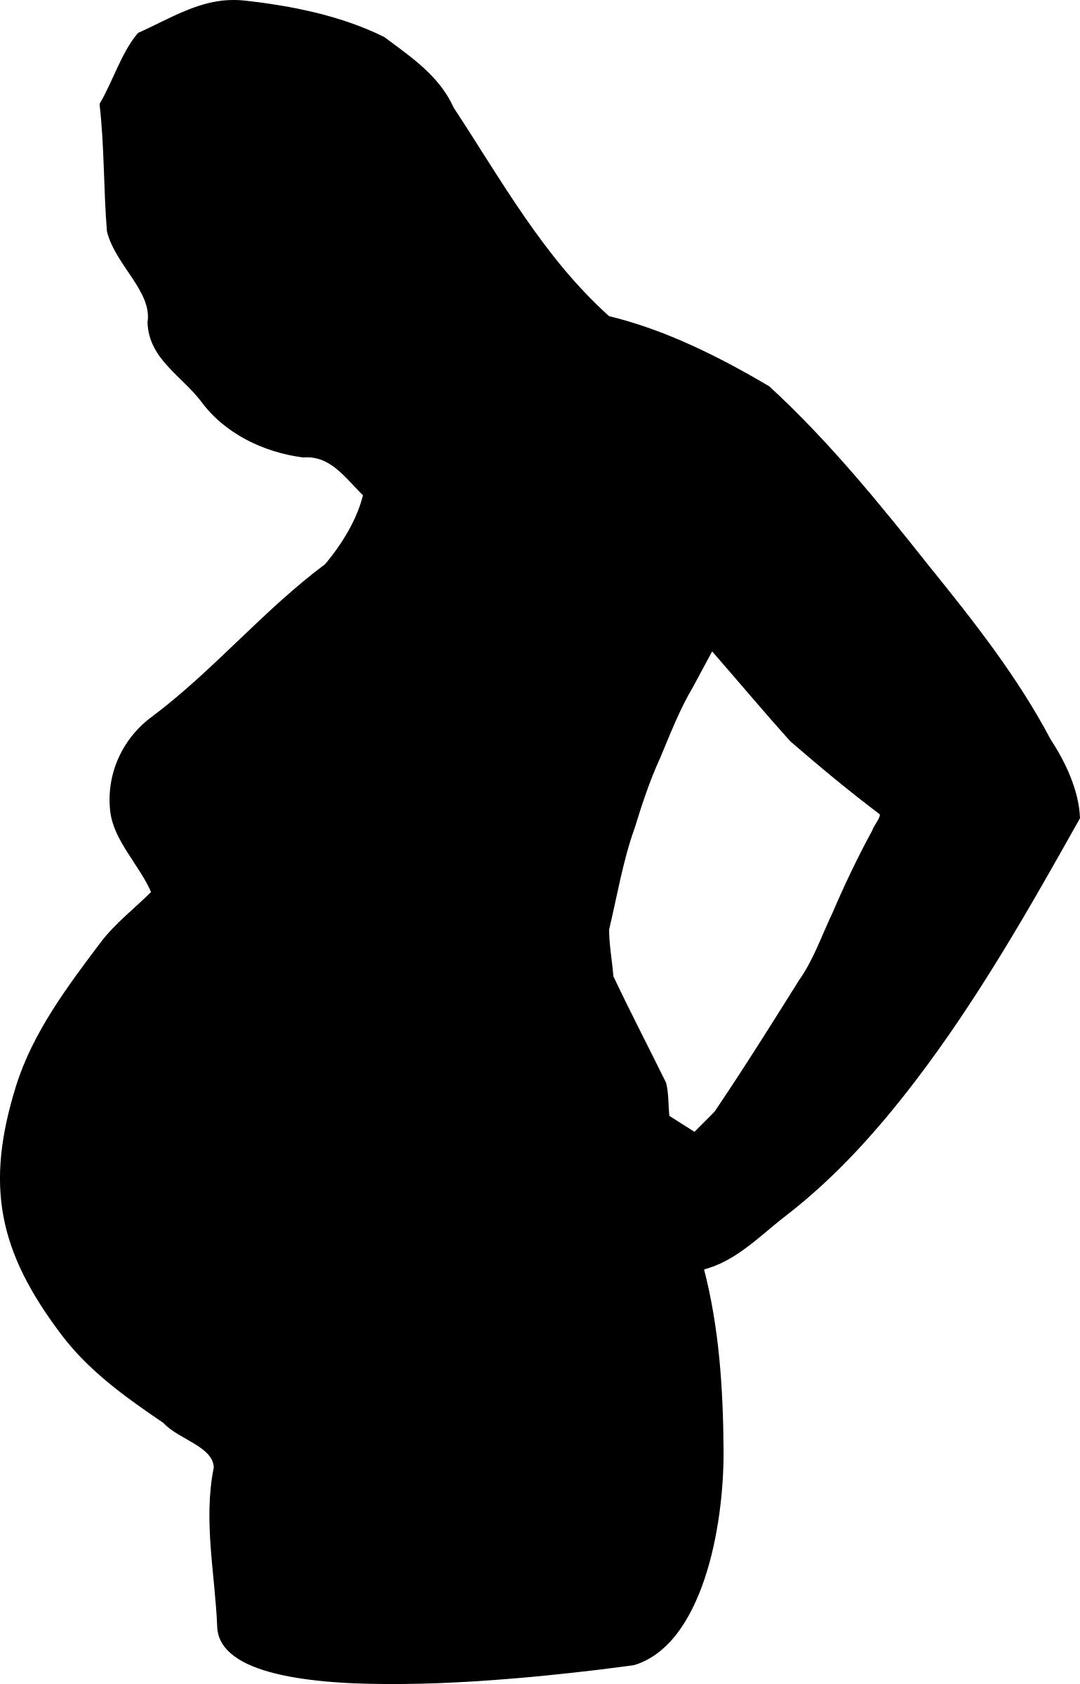 Pregnant woman silhouette png transparent